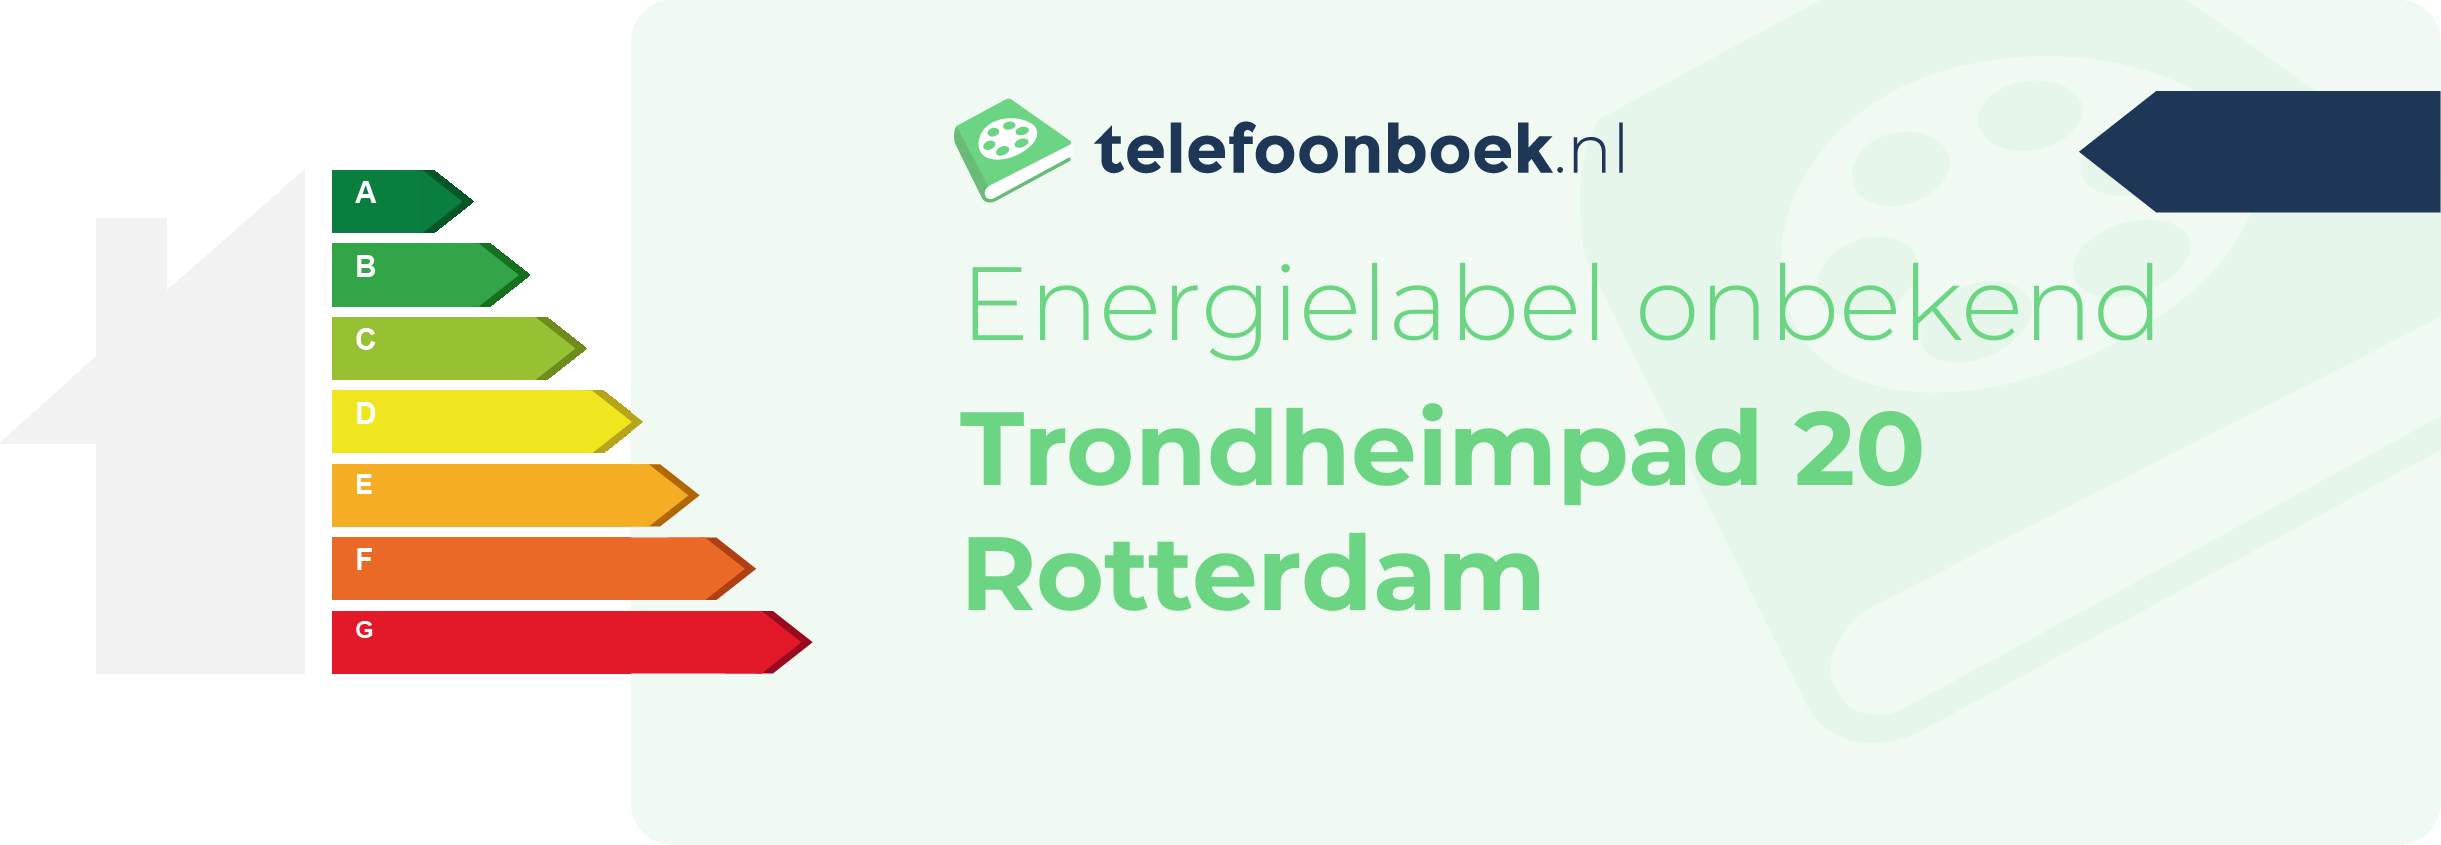 Energielabel Trondheimpad 20 Rotterdam